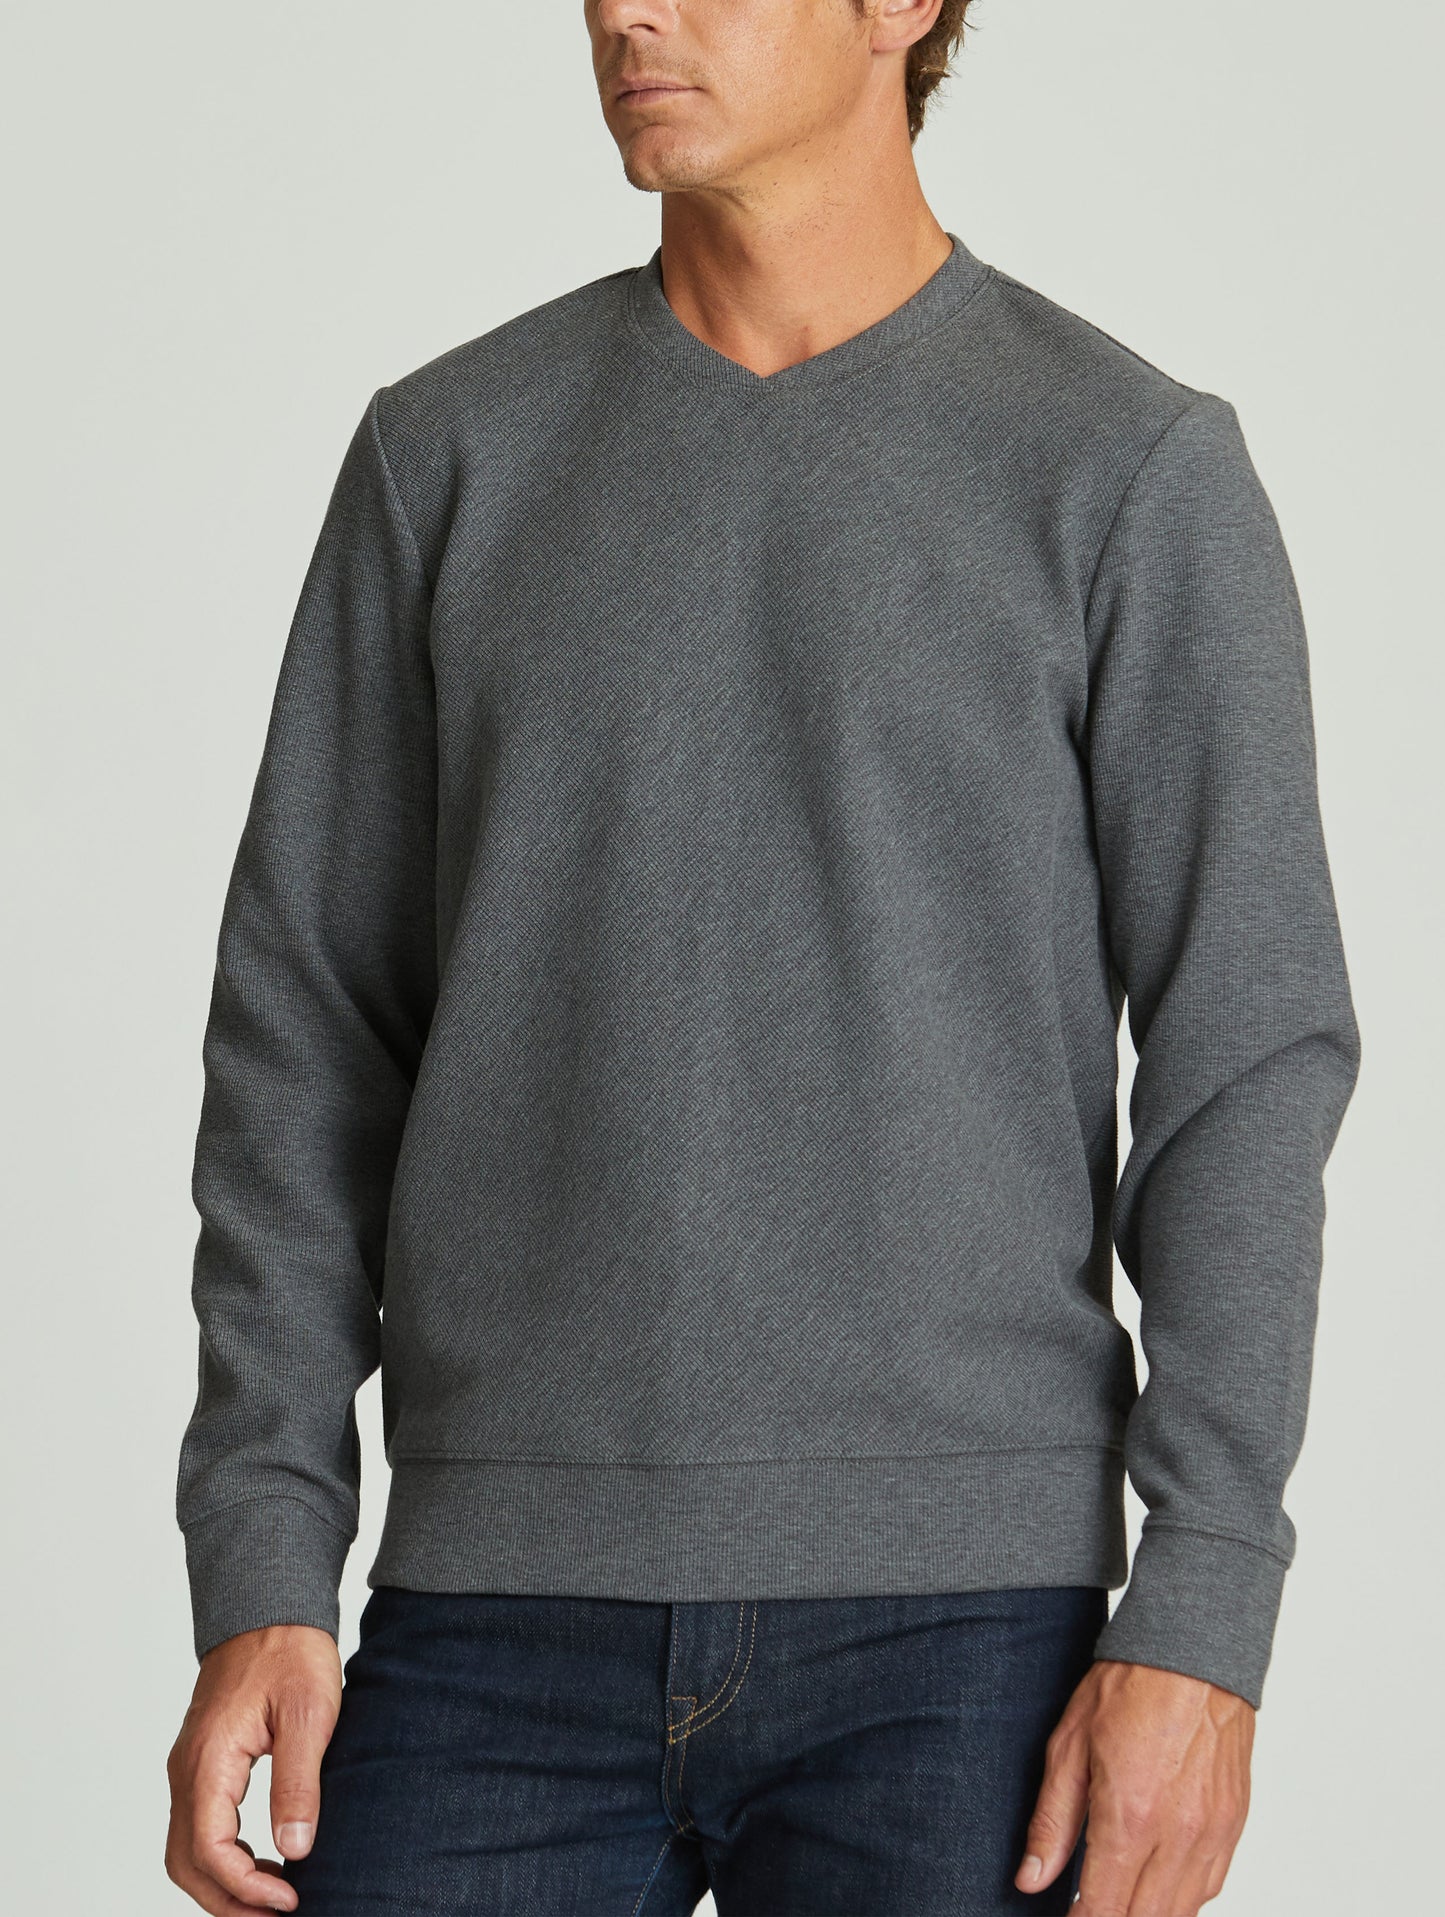 man wearing grey pullover